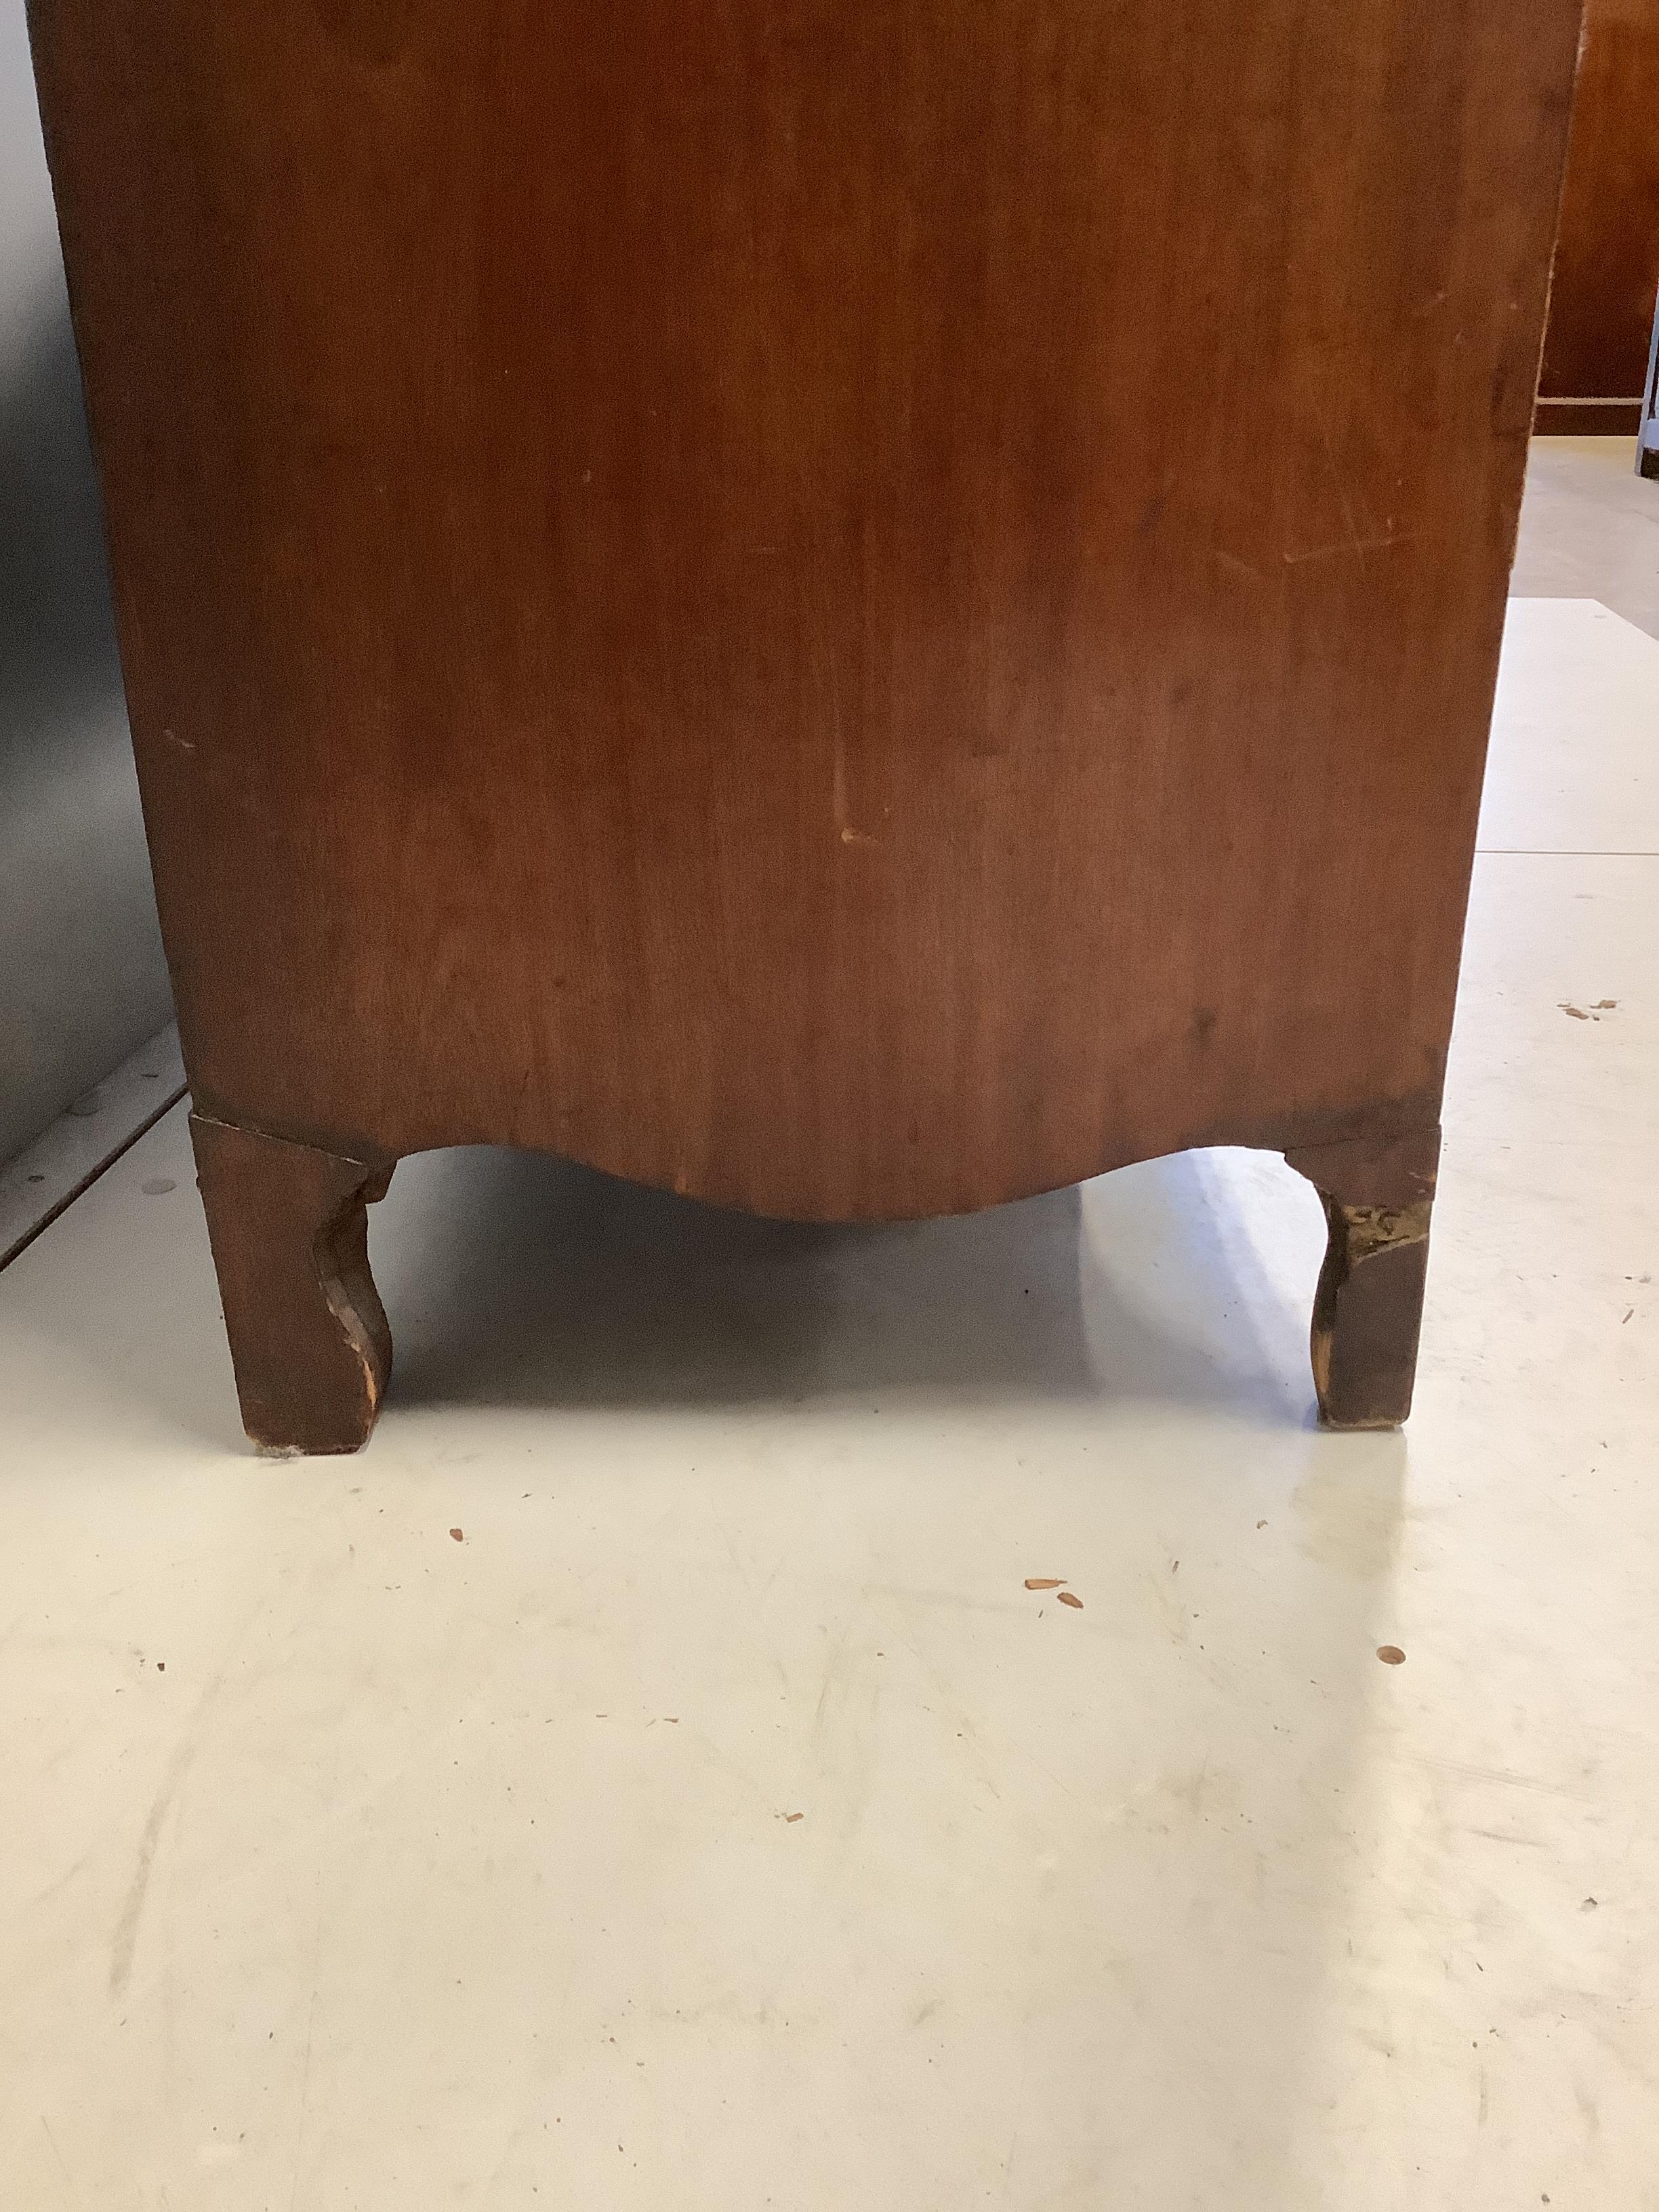 A George IV mahogany four drawer chest, width 94cm, depth 48cm, height 84cm